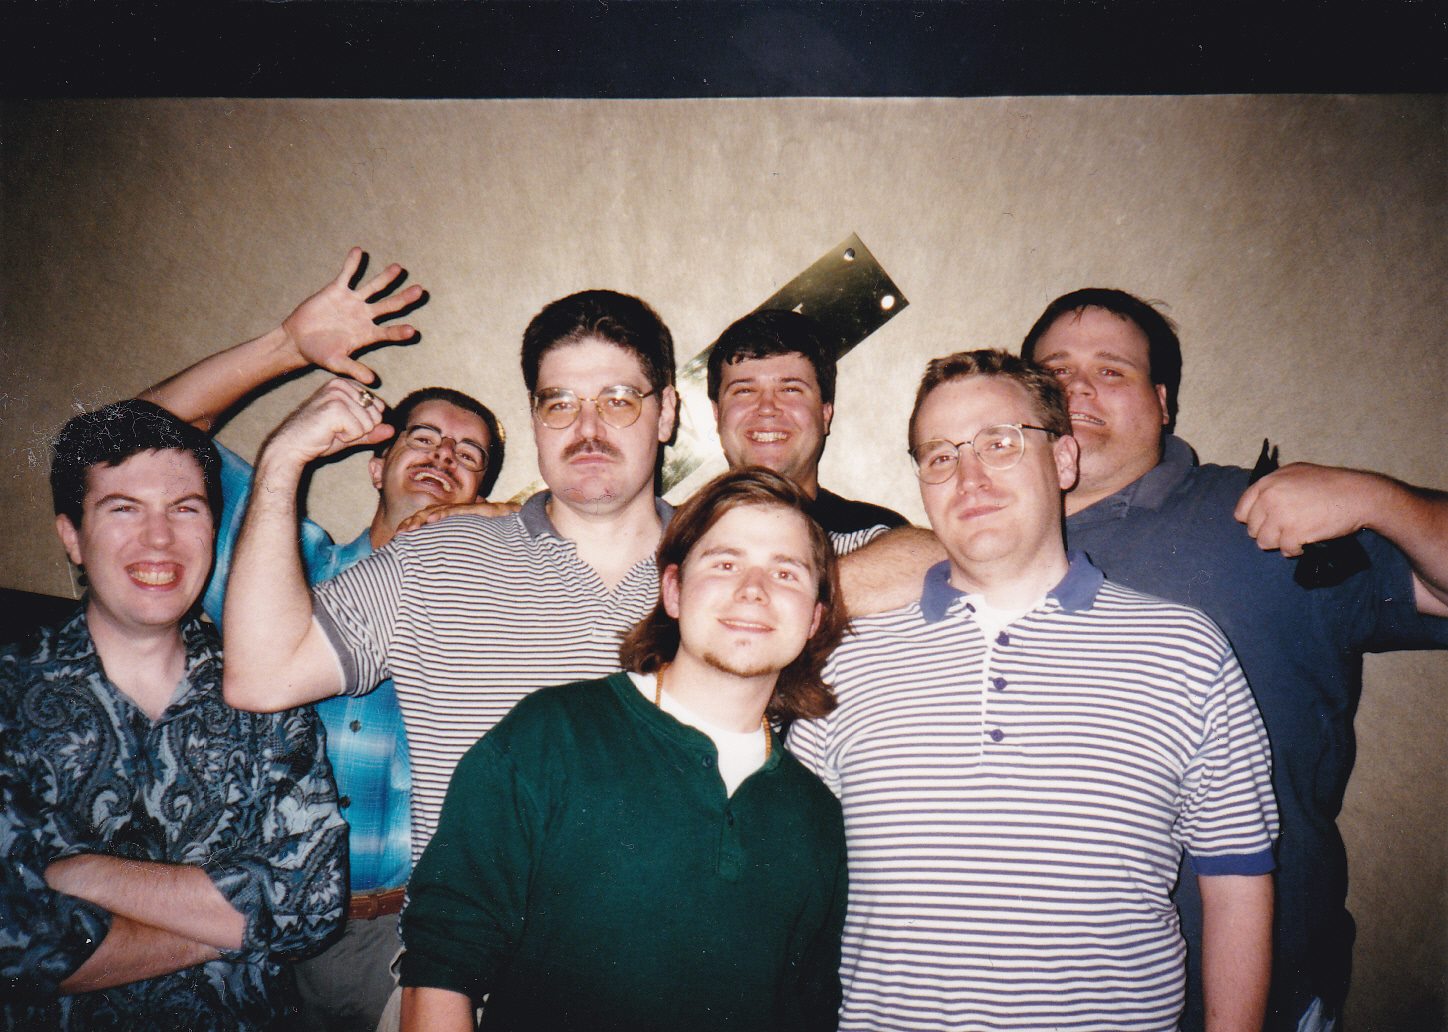 Jimmy, Roy, Mark, Jonny, Chris, Doug, and Jay